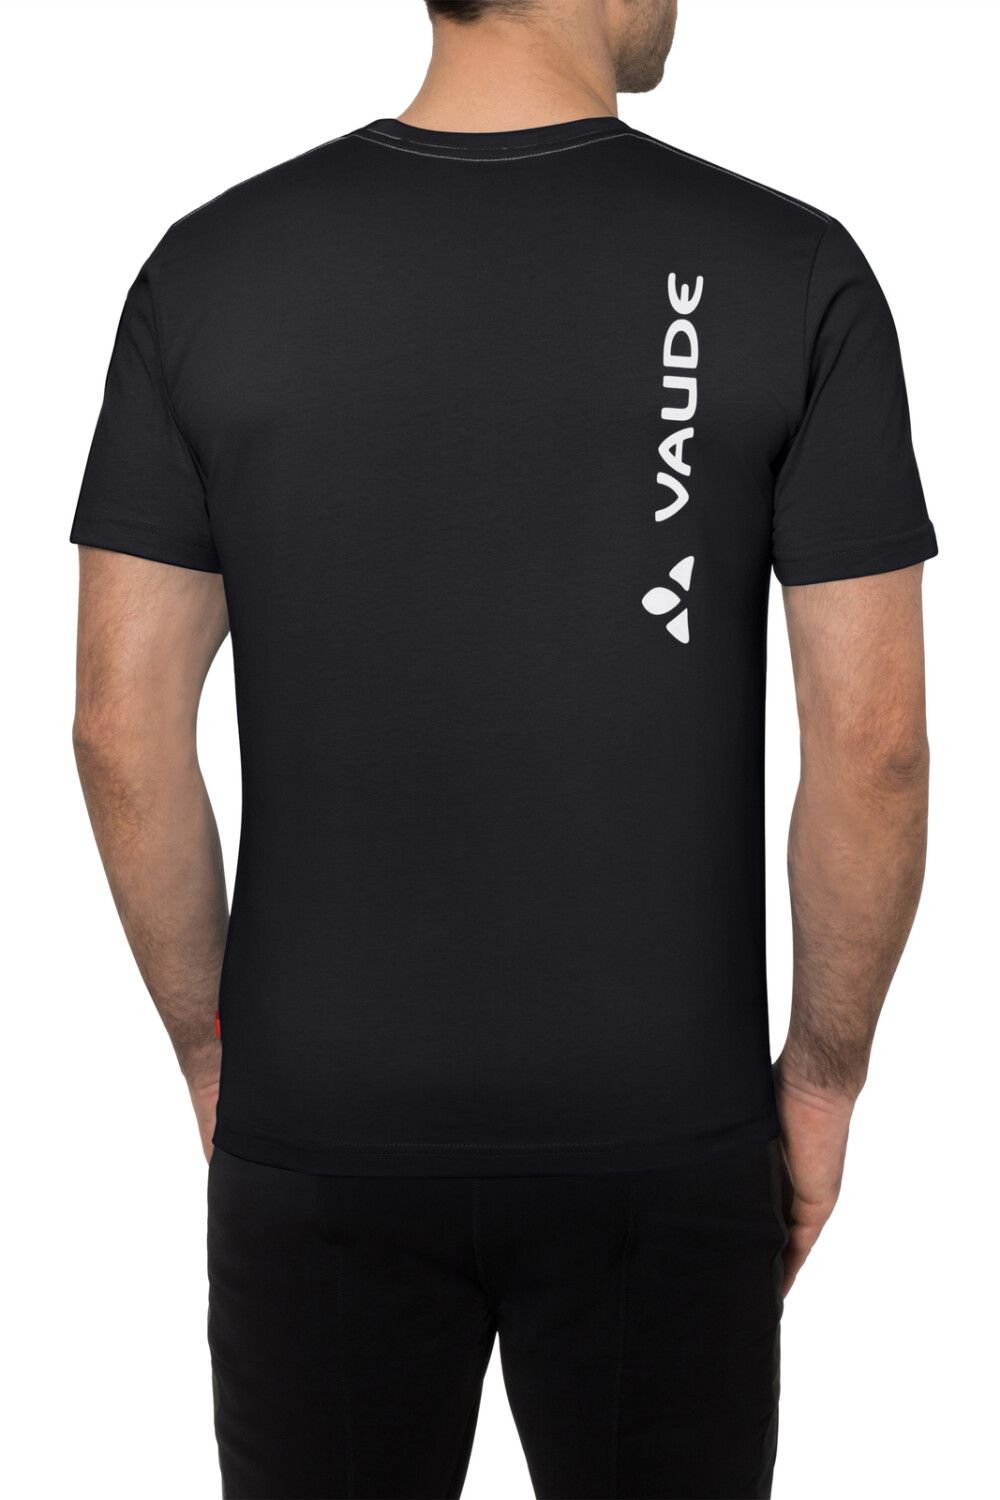 VAUDE Men's Brand T-Shirt (Bild 9)